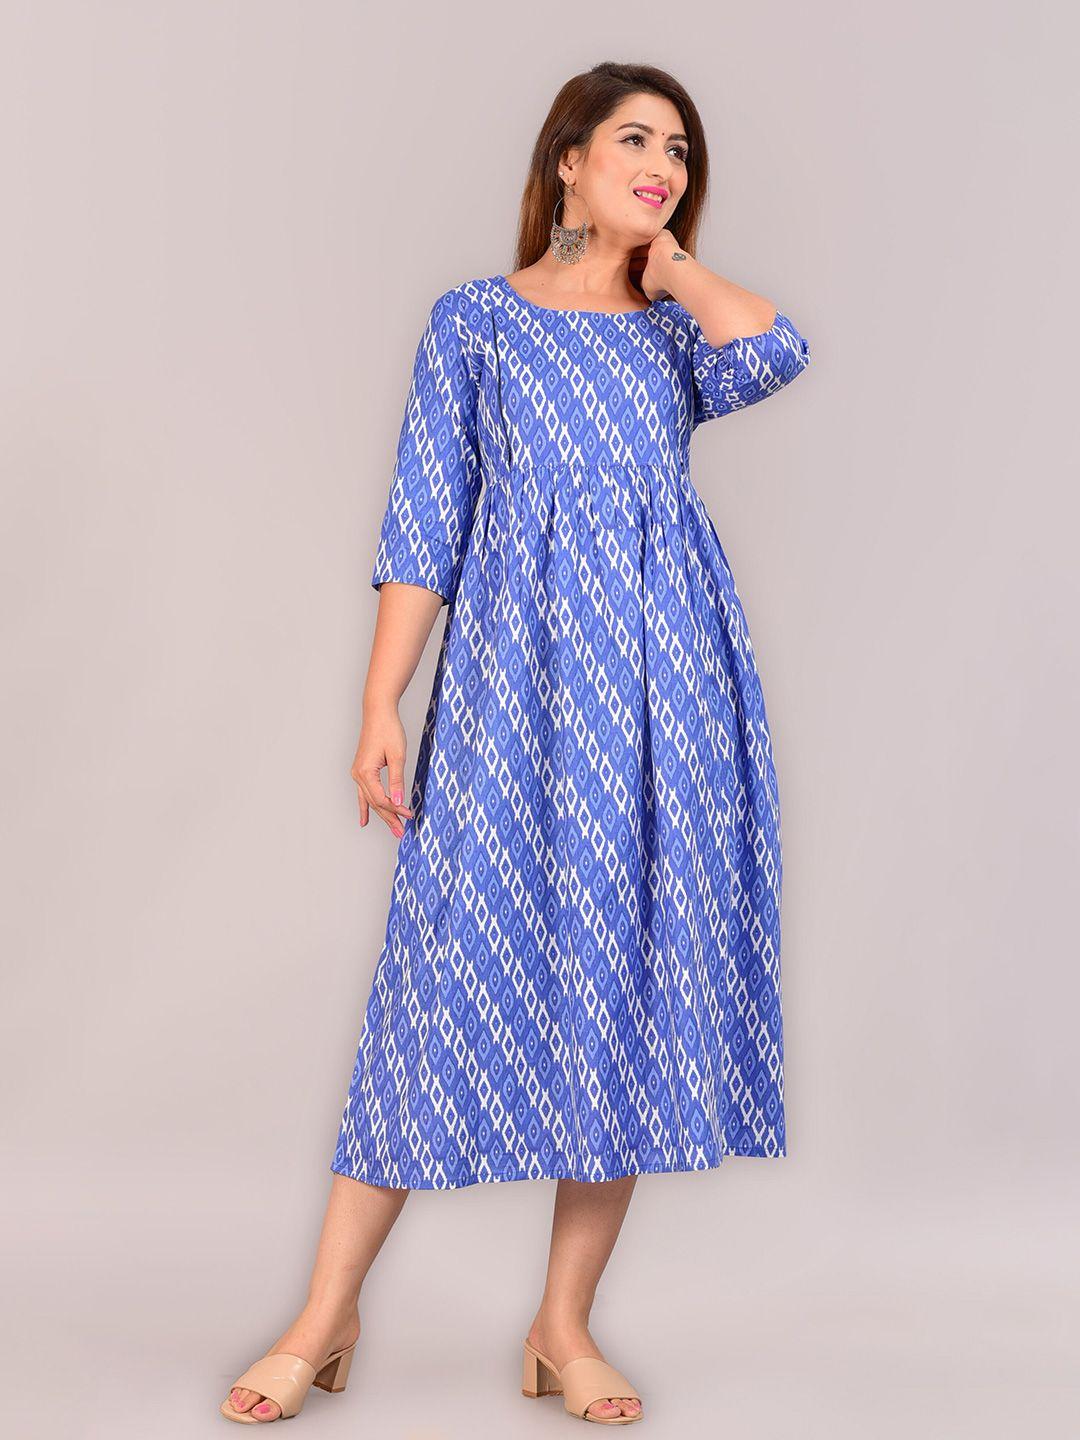 unibliss-blue-floral-print-maternity-maxi-three-quarter-dress